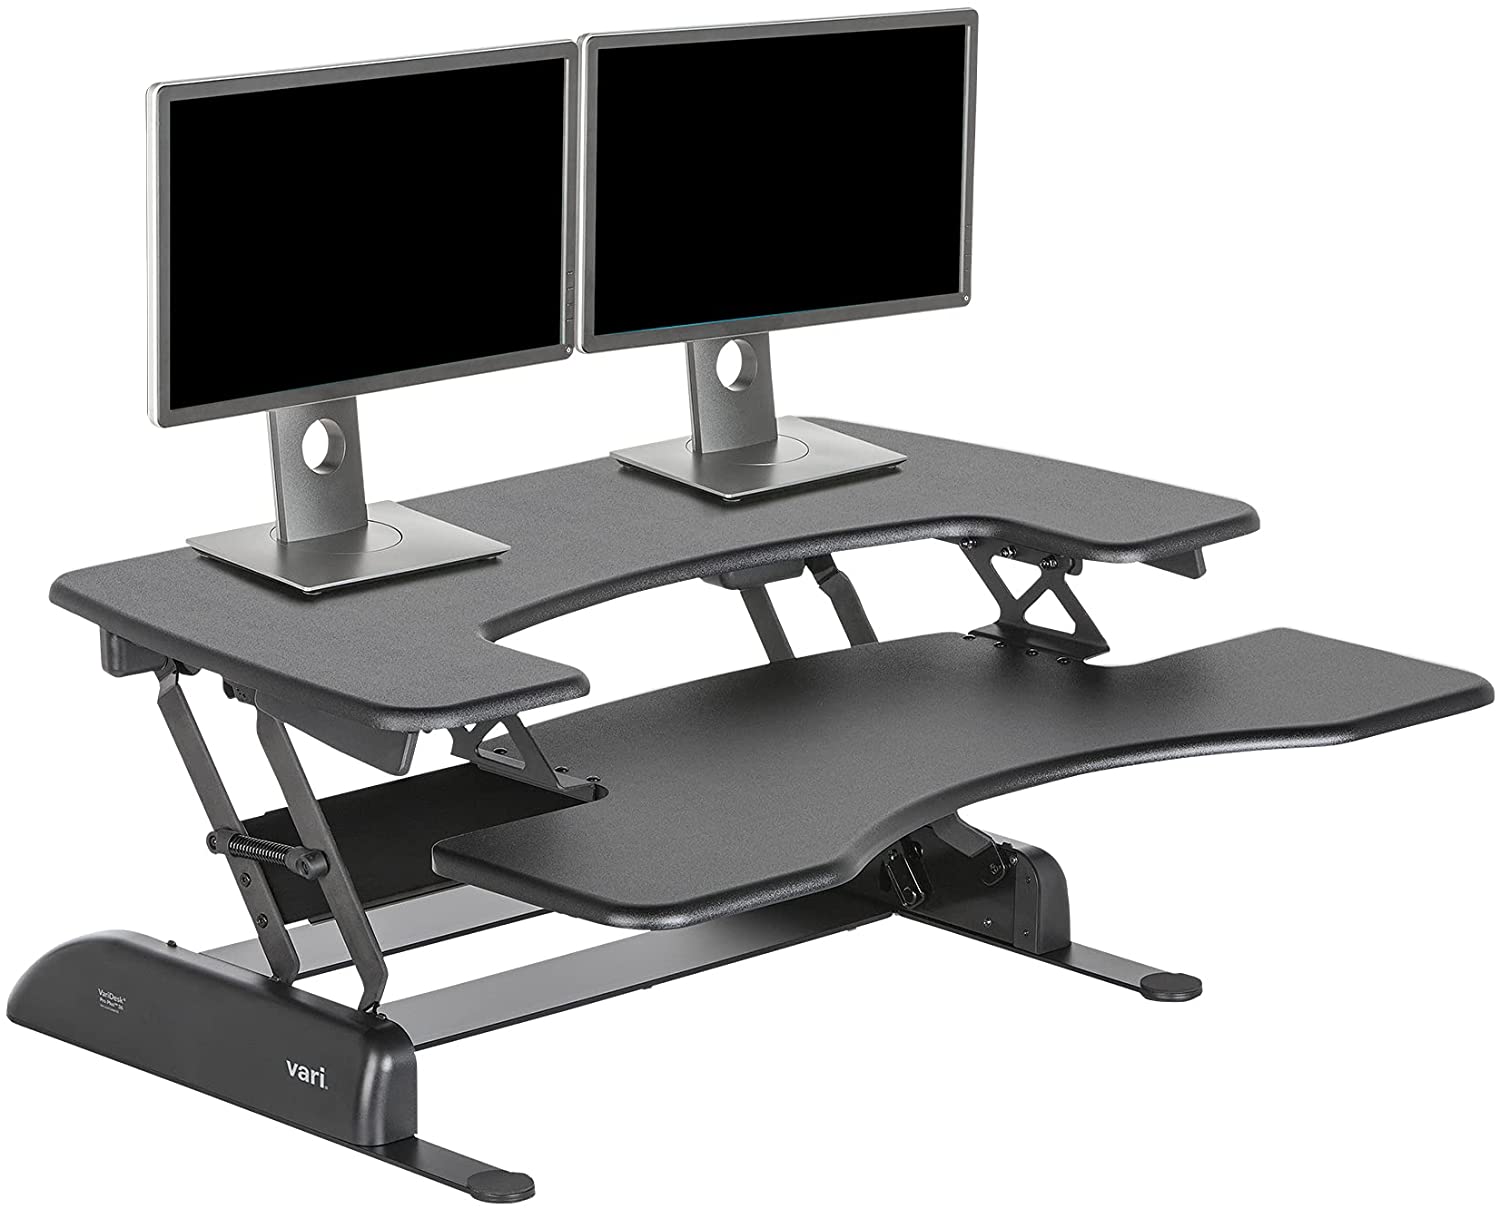 8 Unbelievable Benefits Of A Standing Desk Converter 73433 1 - 8 Unbelievable Benefits Of A Standing Desk Converter